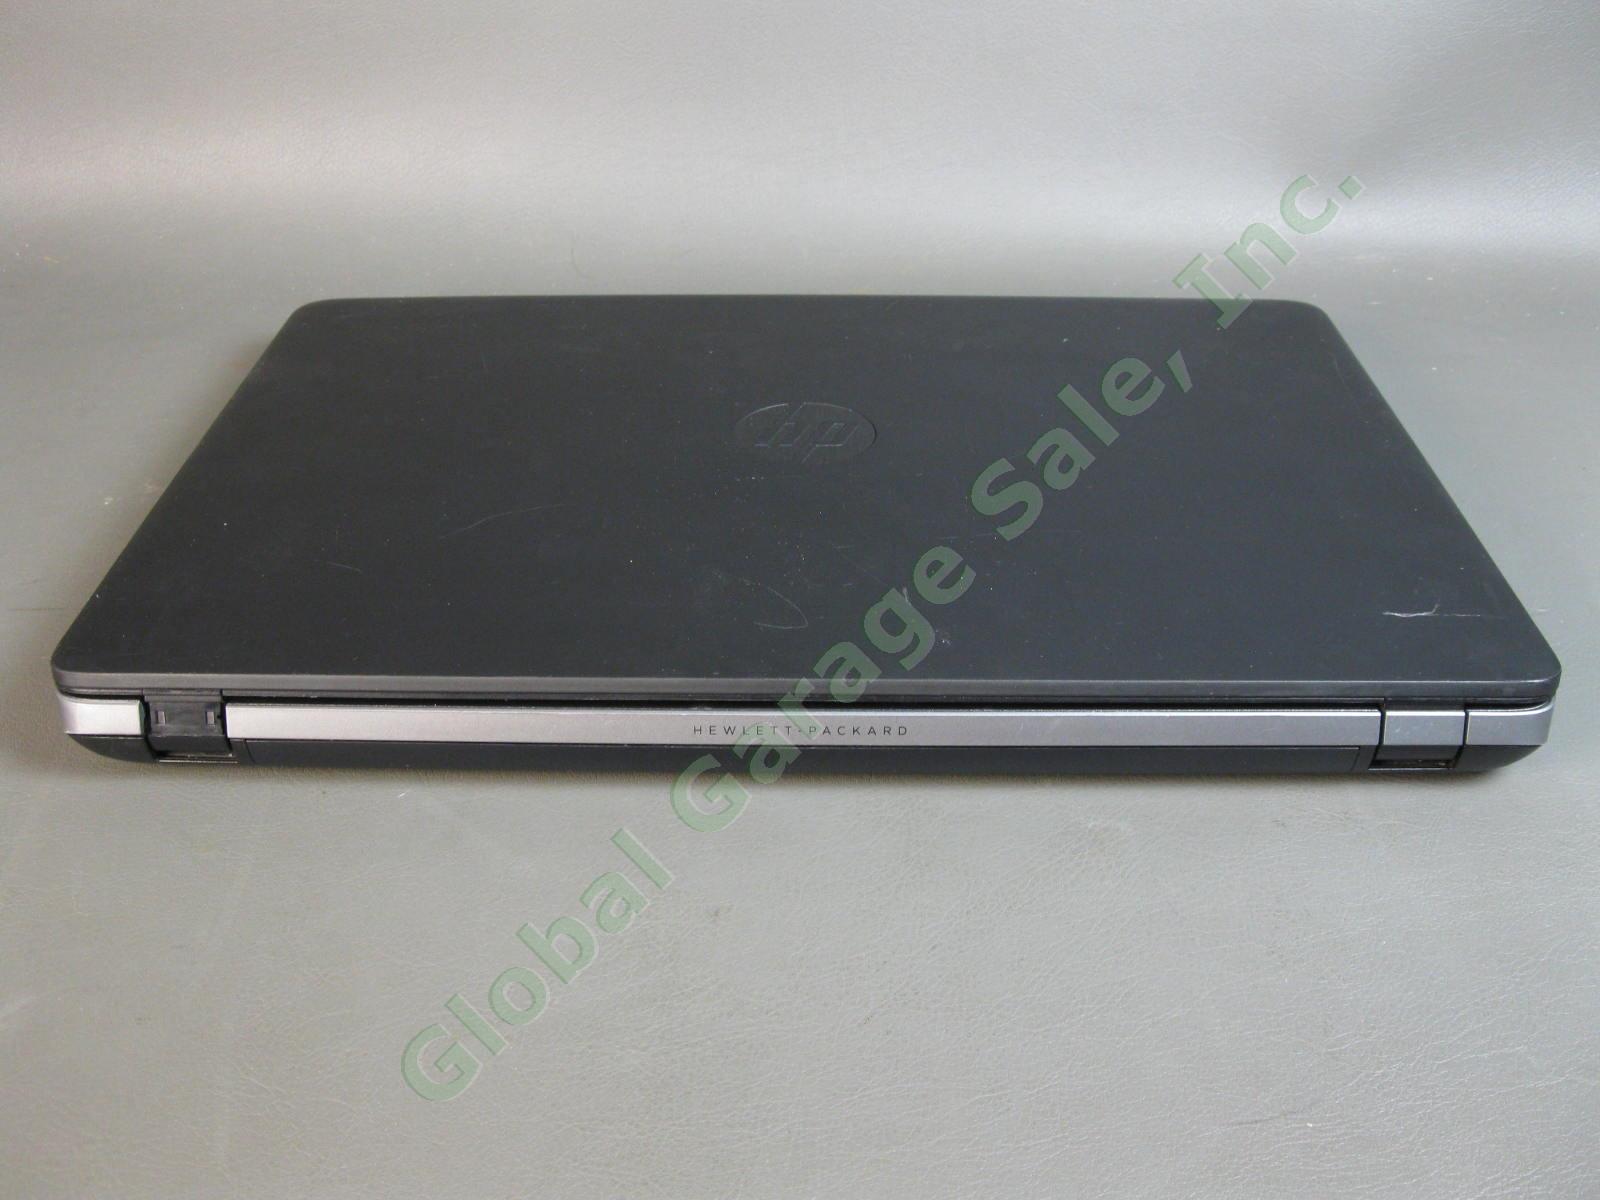 HP ProBook 450 G1 Laptop Computer i5-4200M 4GB 320GB Win10 WIFI DVD Webcam Power 5